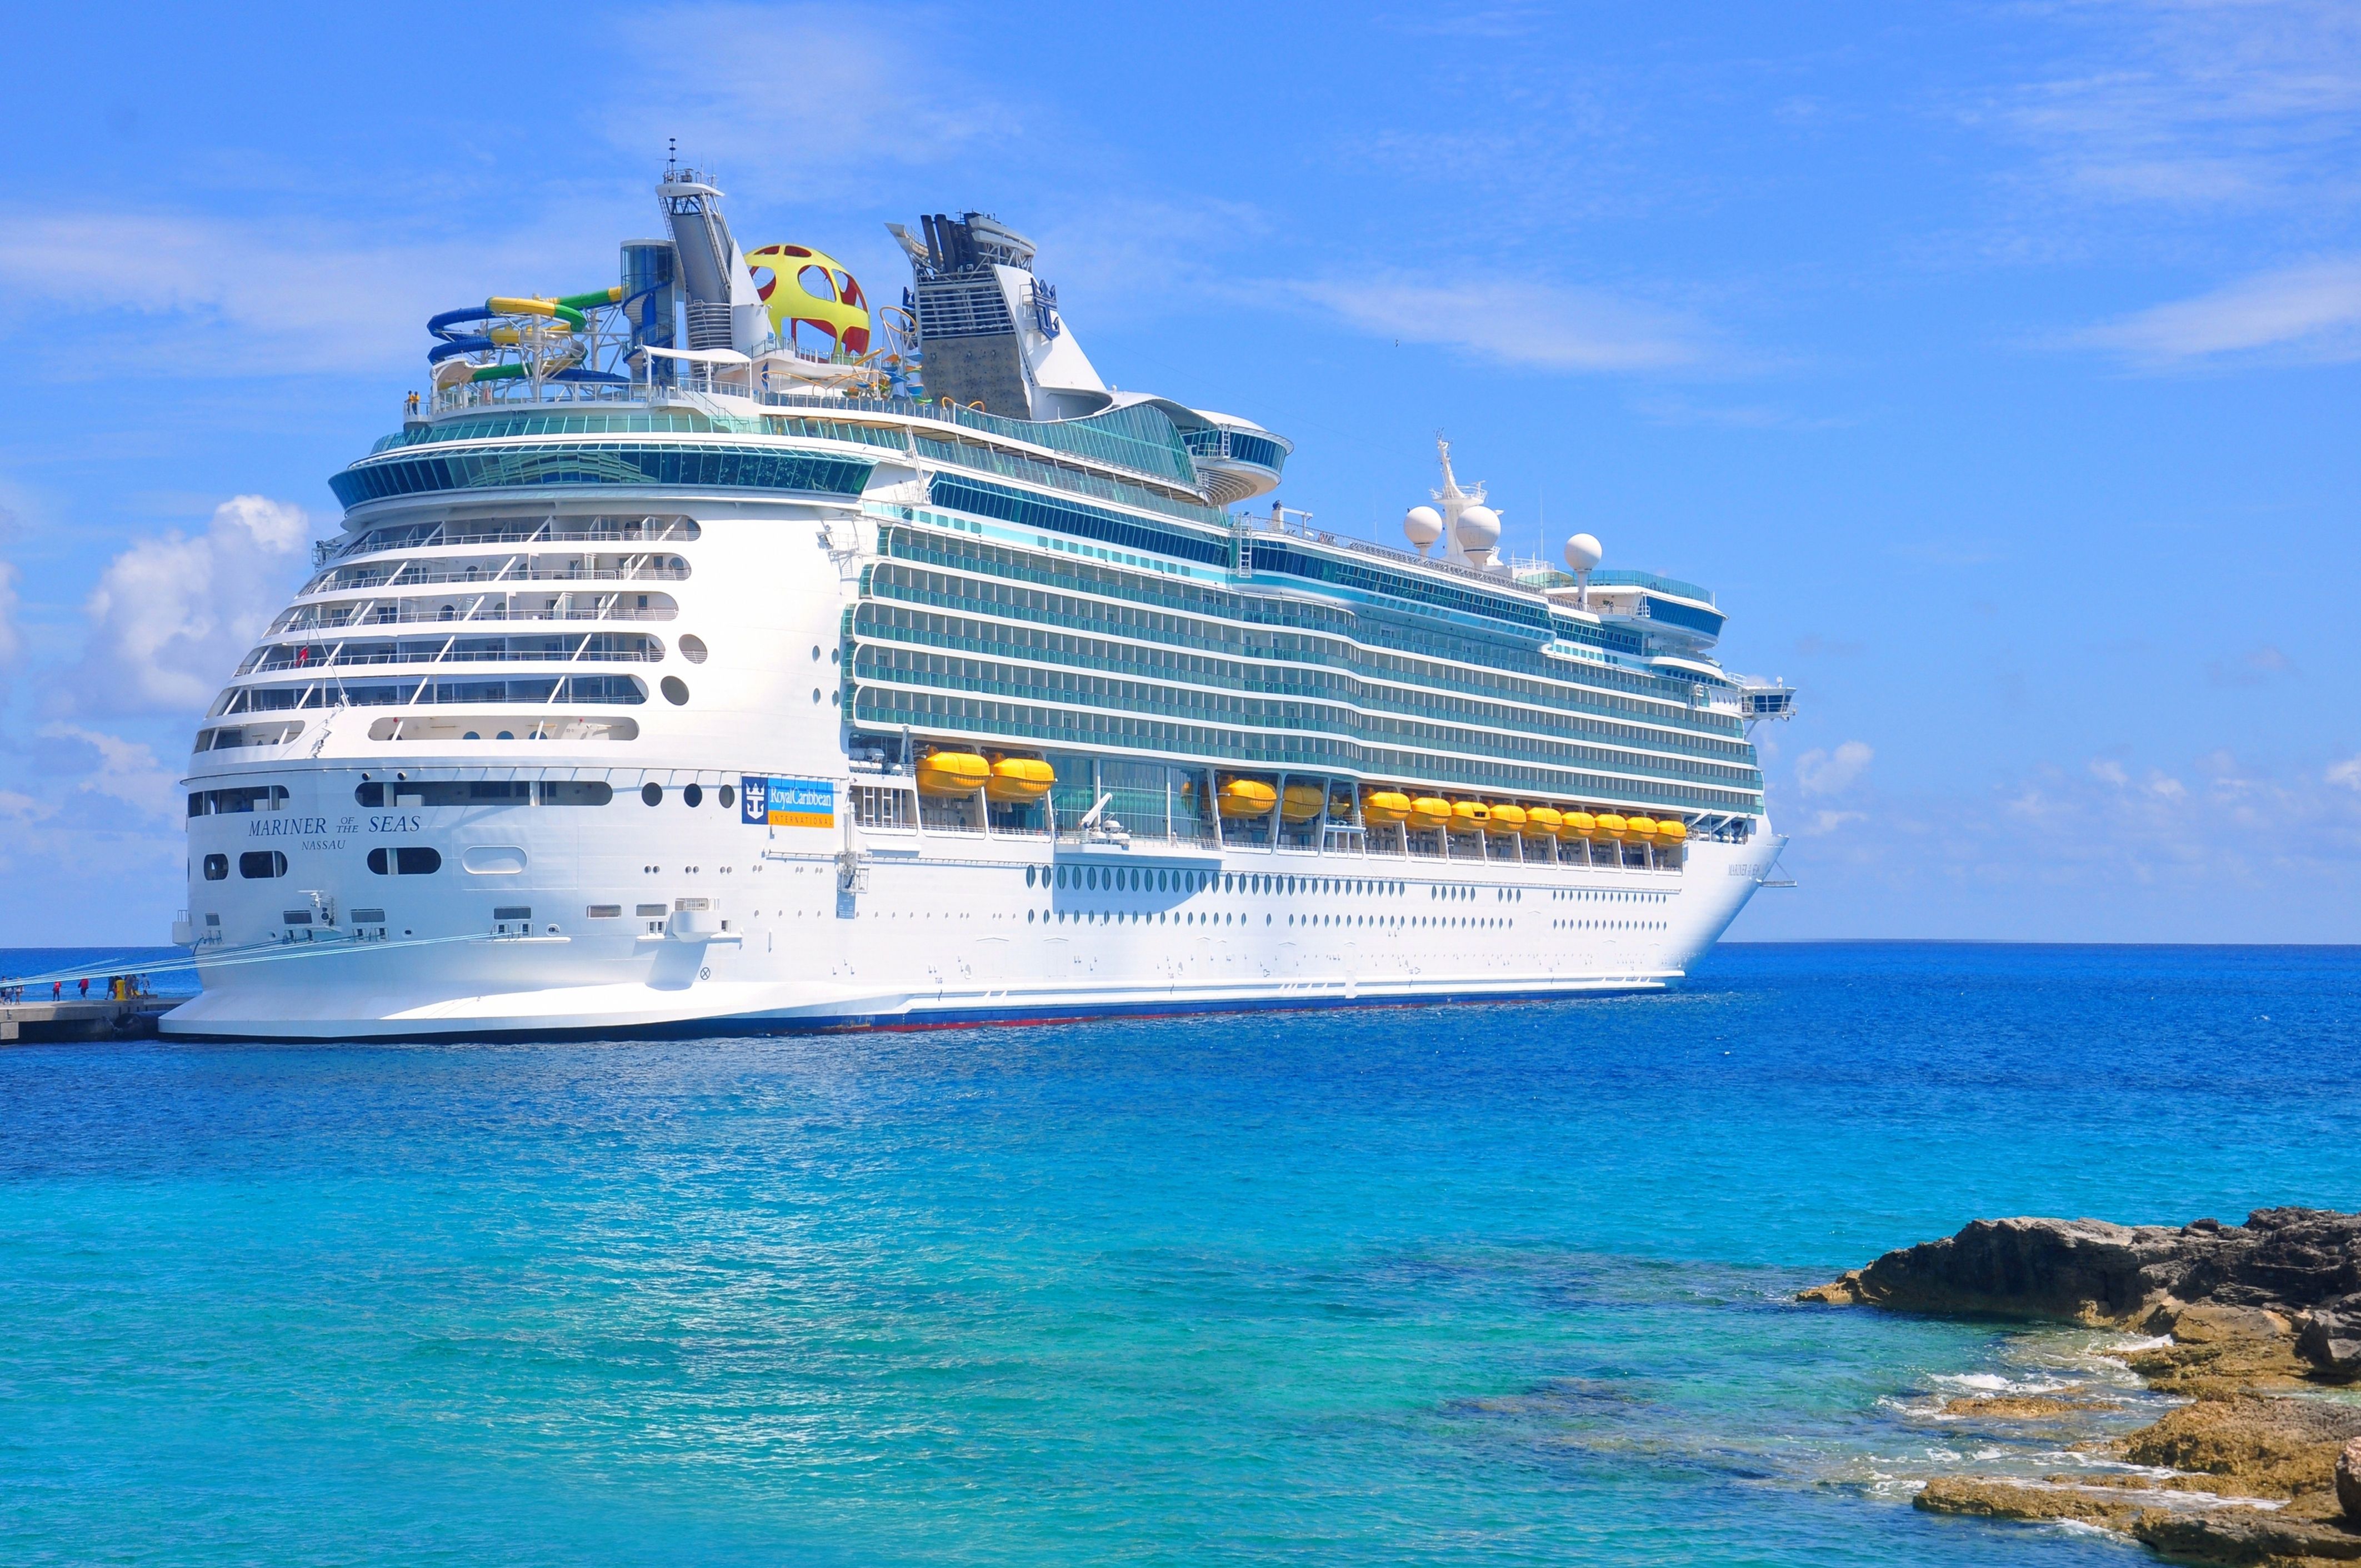 The Royal Caribbean International Cruise ship